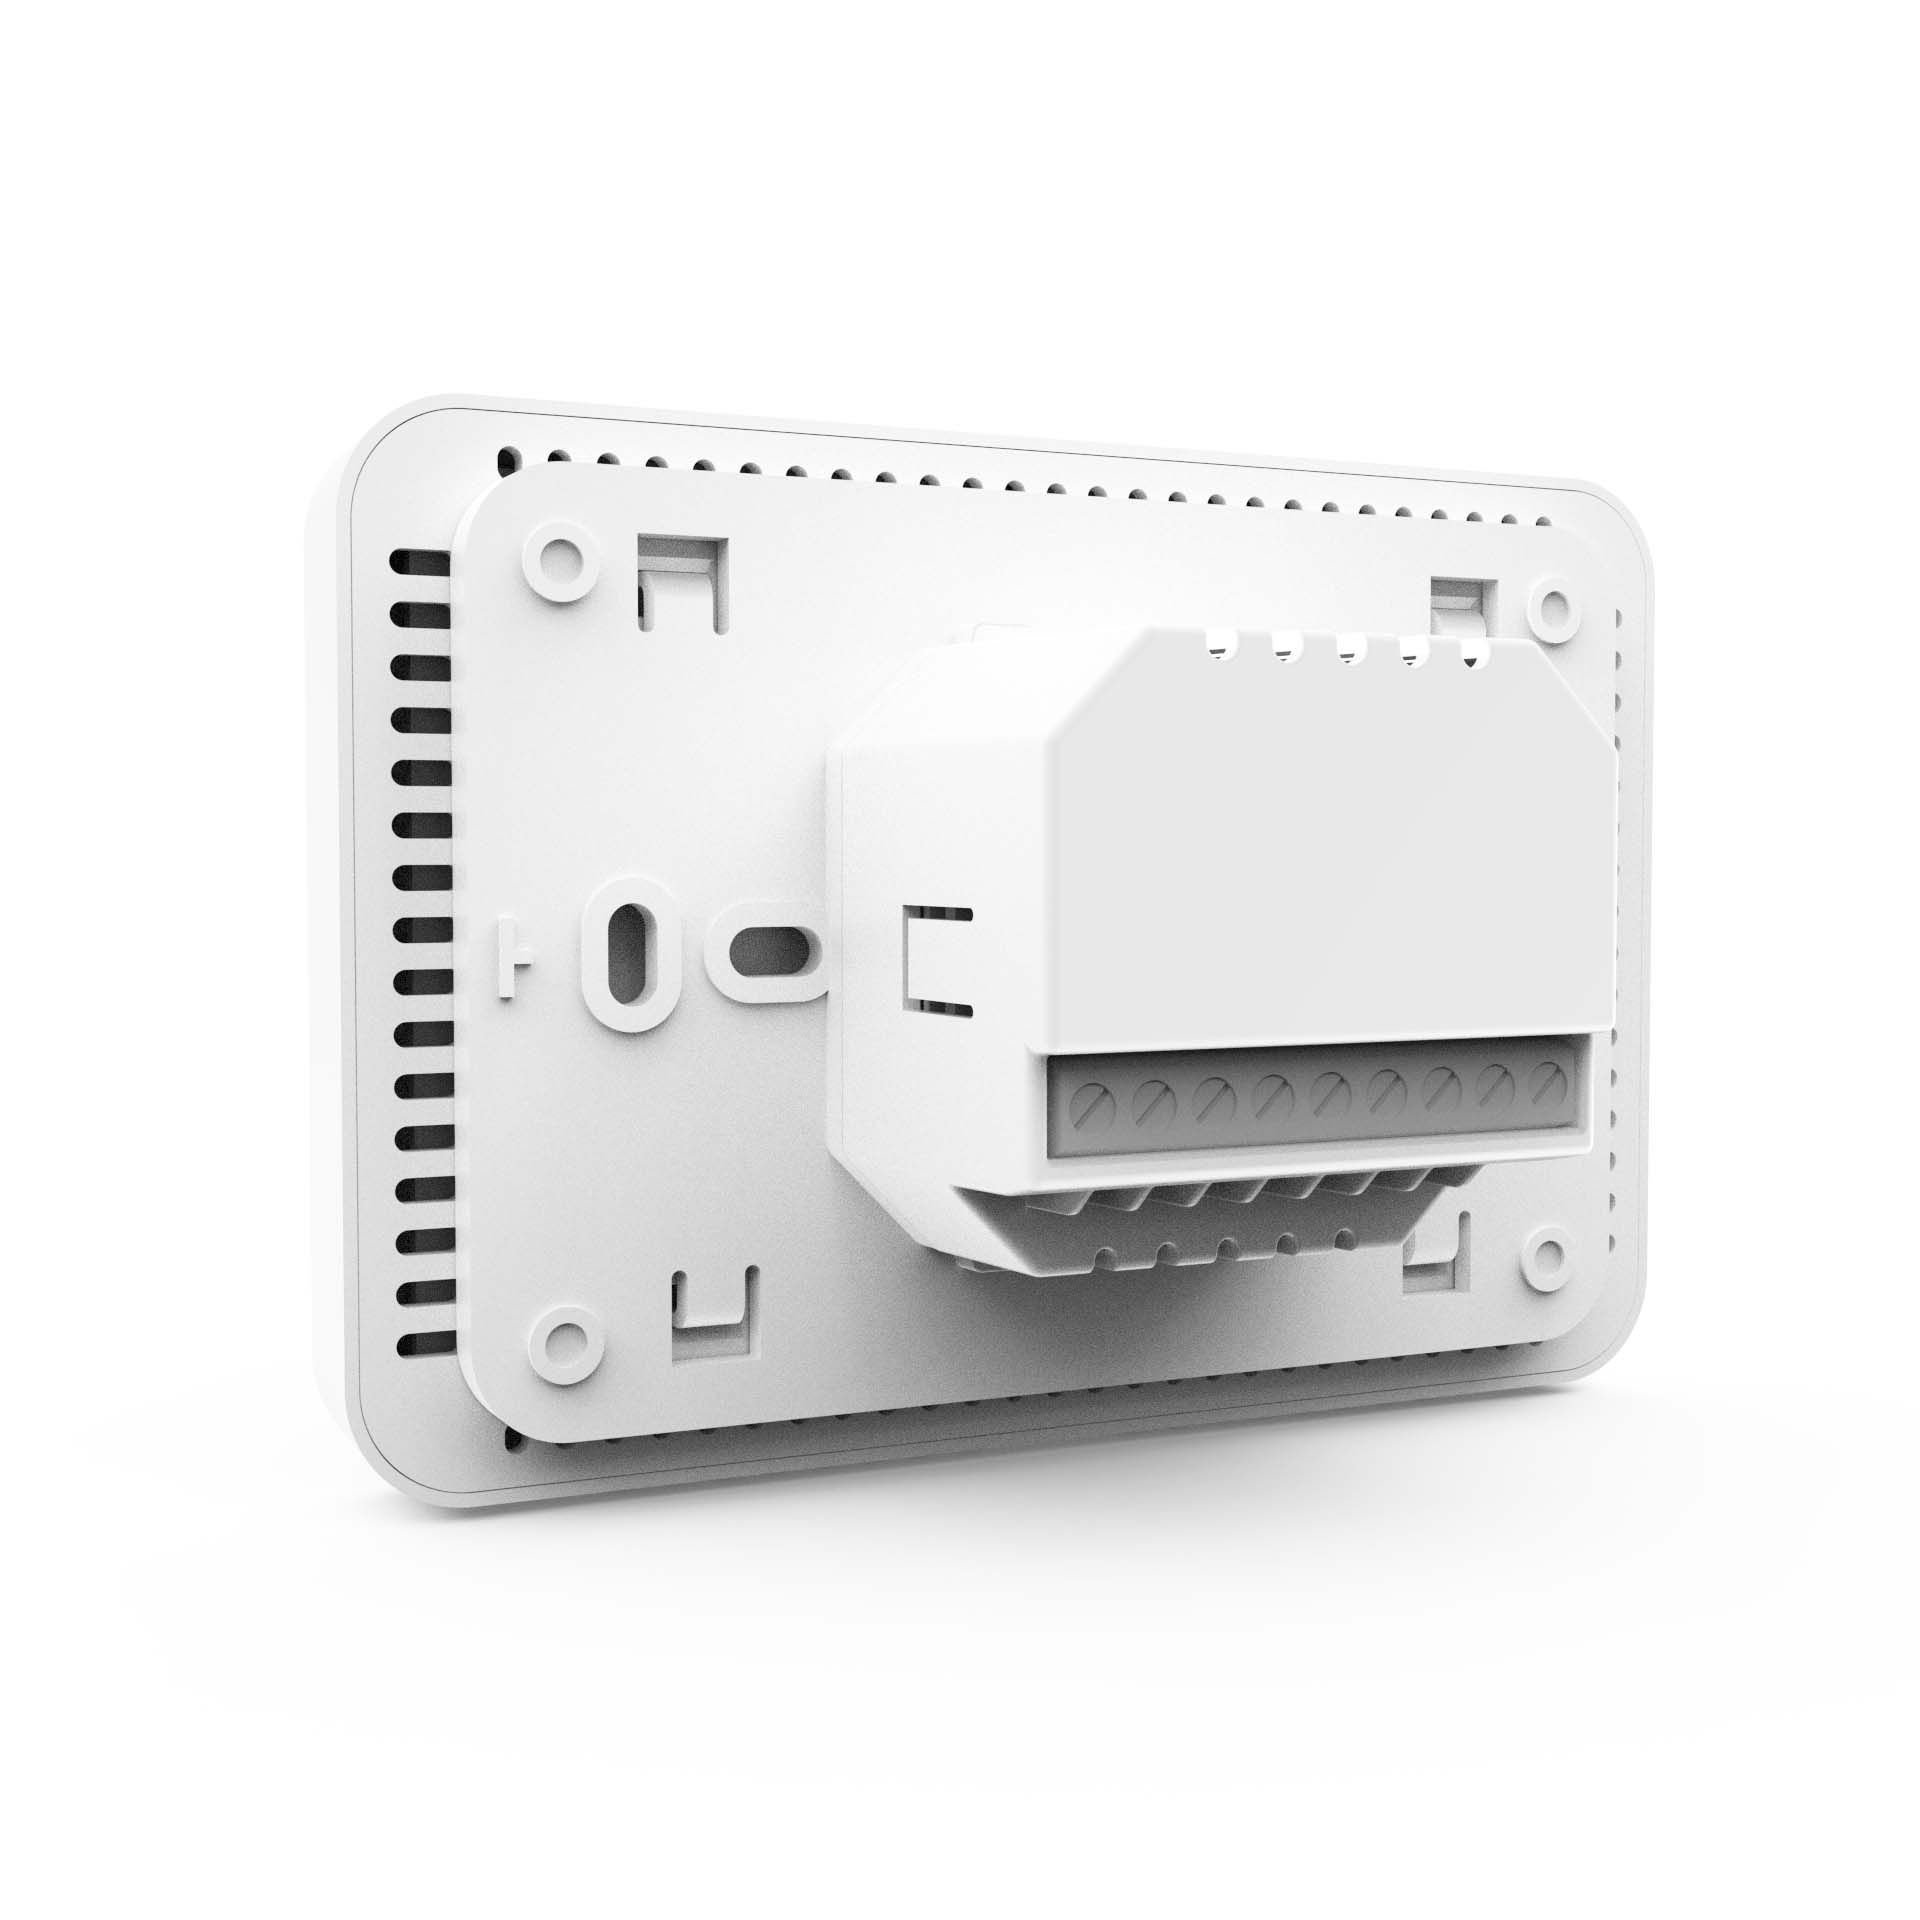 Touch Screen Smart Fan Coil Controller WiFi 2.4Ghz KNX BACNET Optional